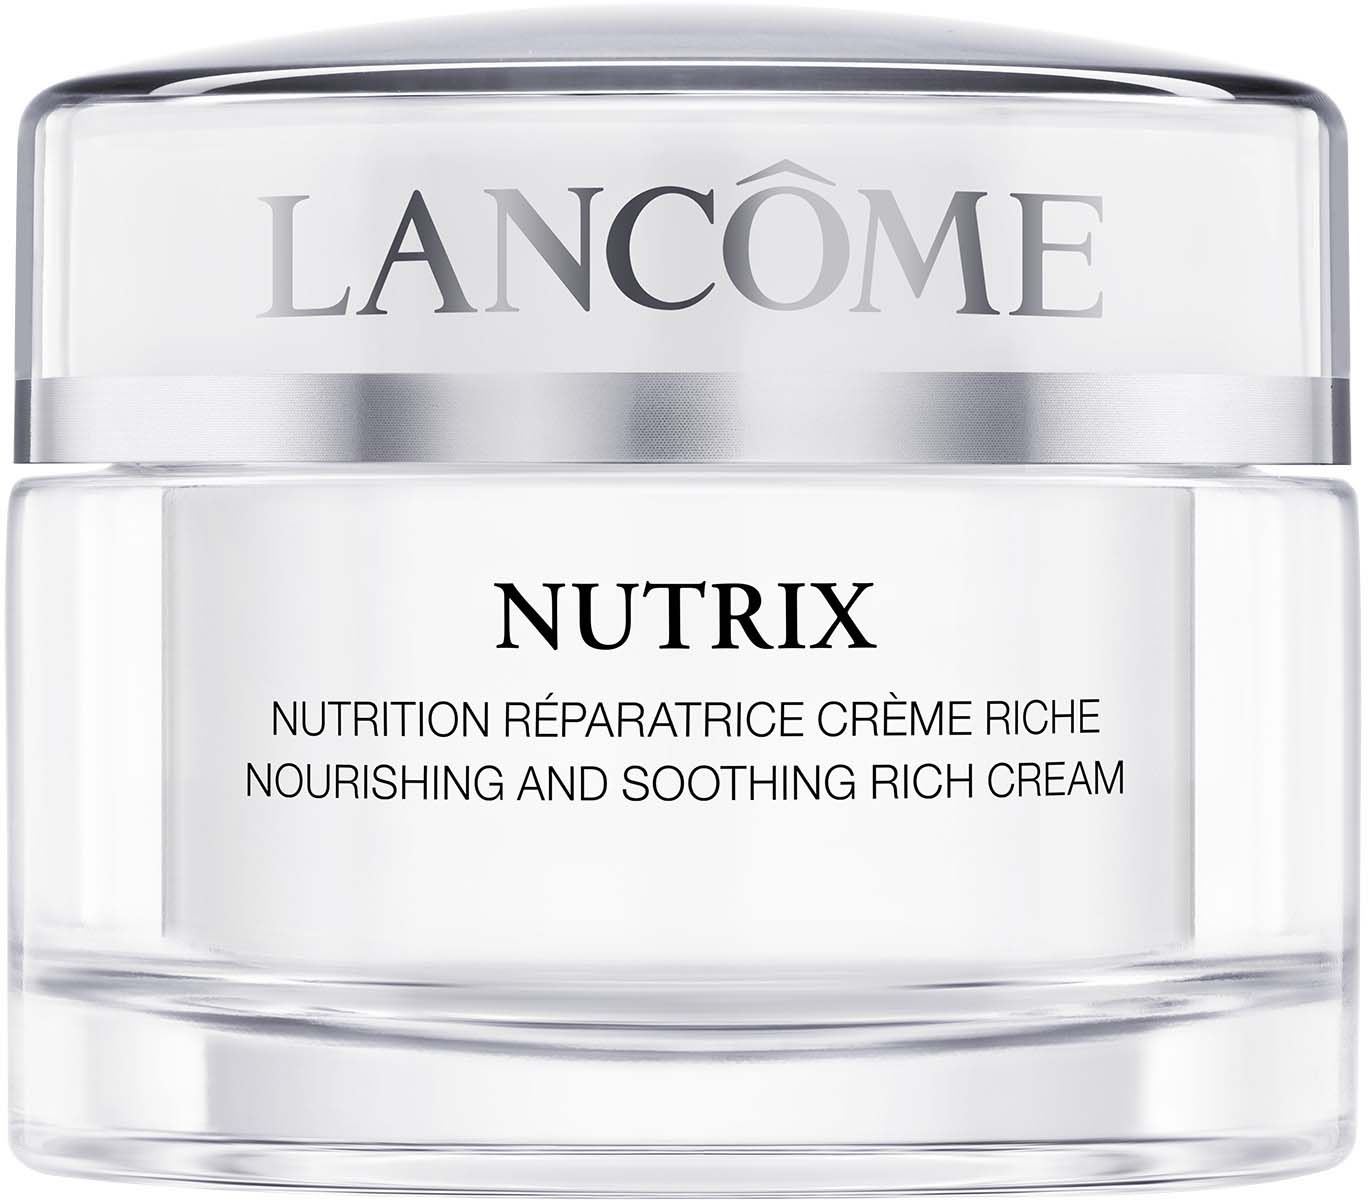 Lancôme Nutrix Face Cream 50.0 ml